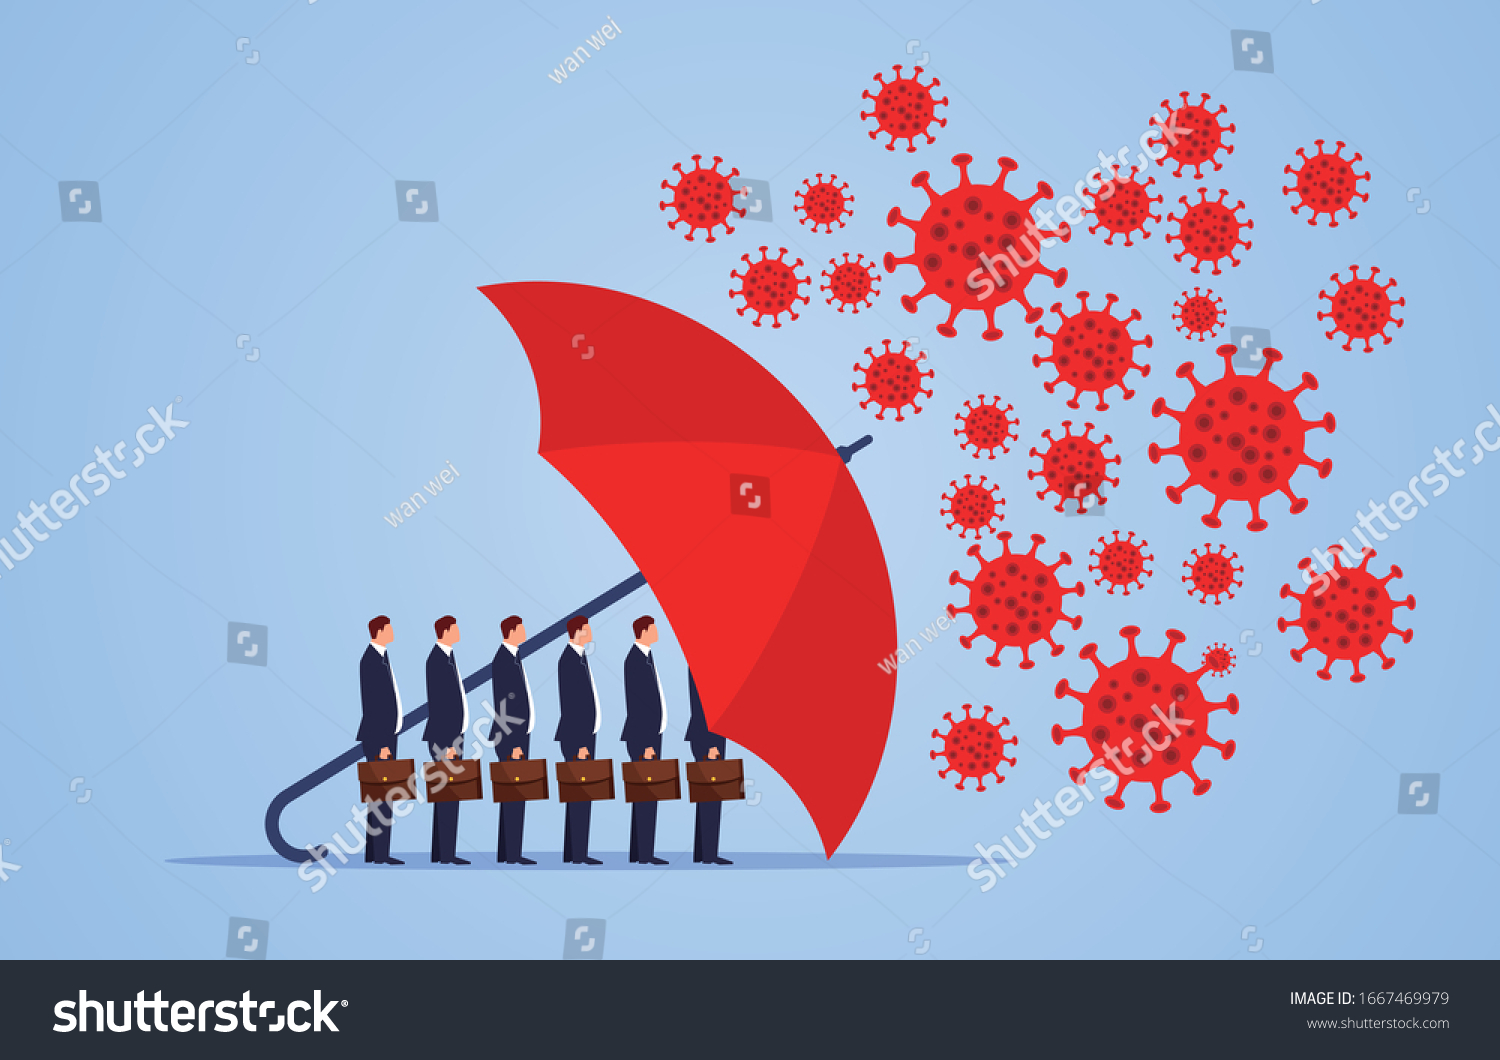 Red umbrella protecting merchants immune novel coronavirus pneumonia infection #1667469979